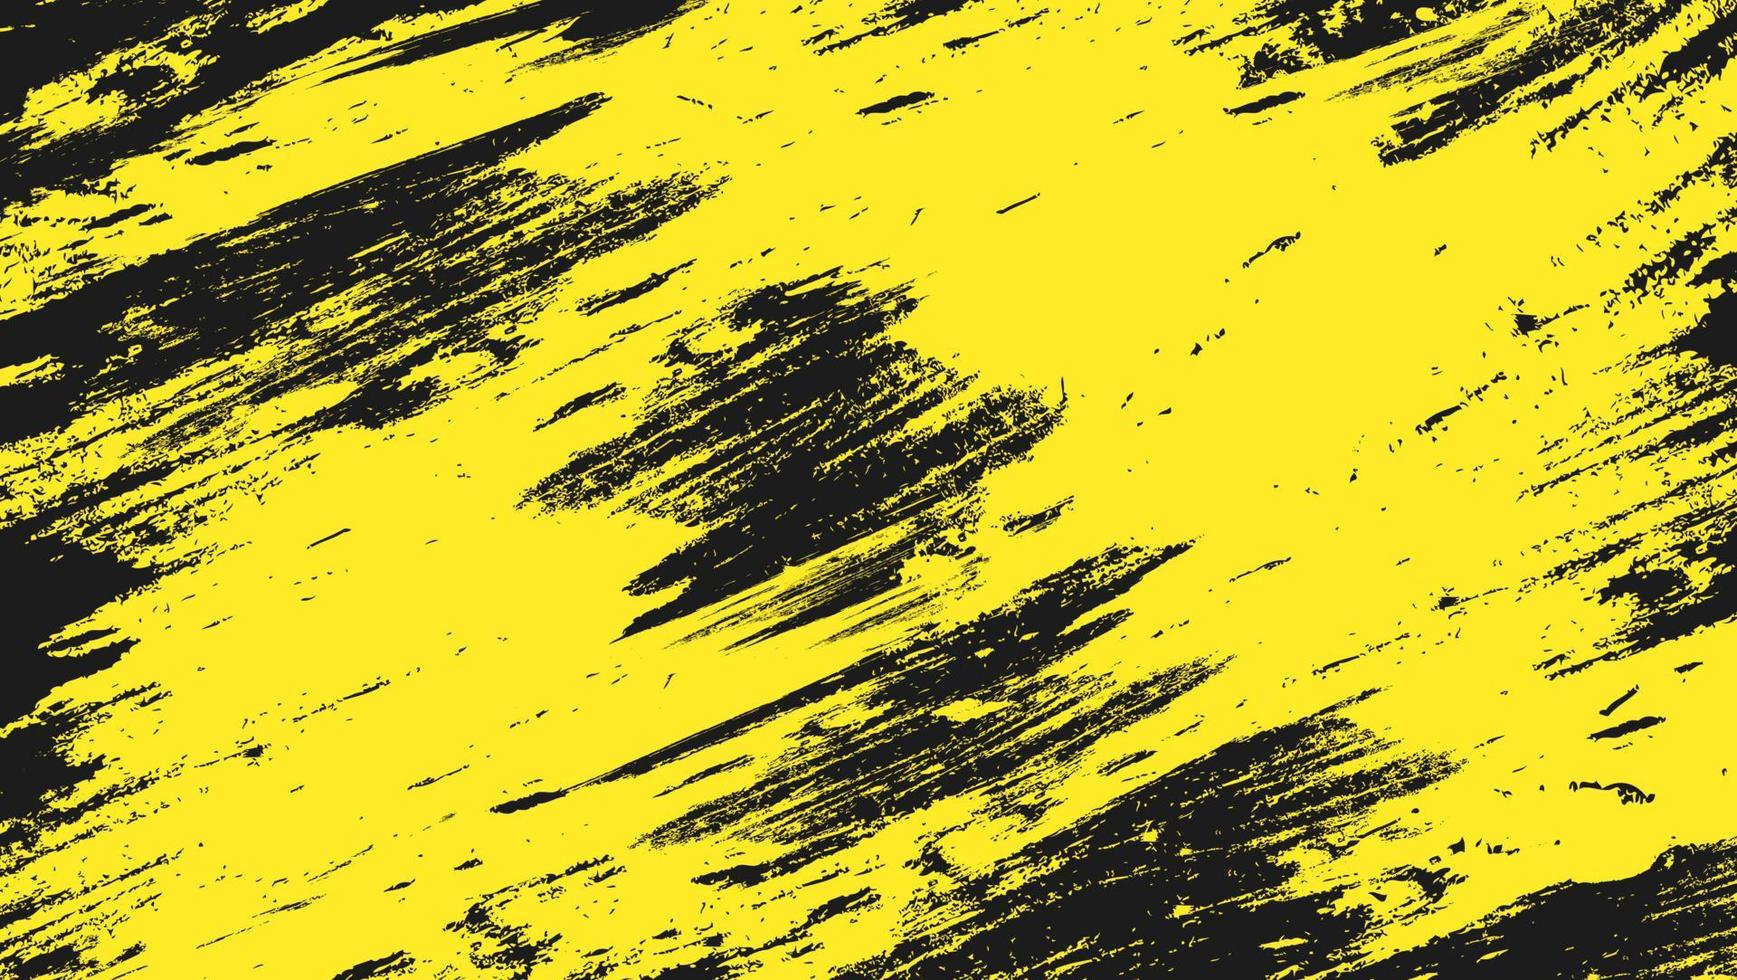 Abstract Yellow Grunge Texture Design In Dark Background vector